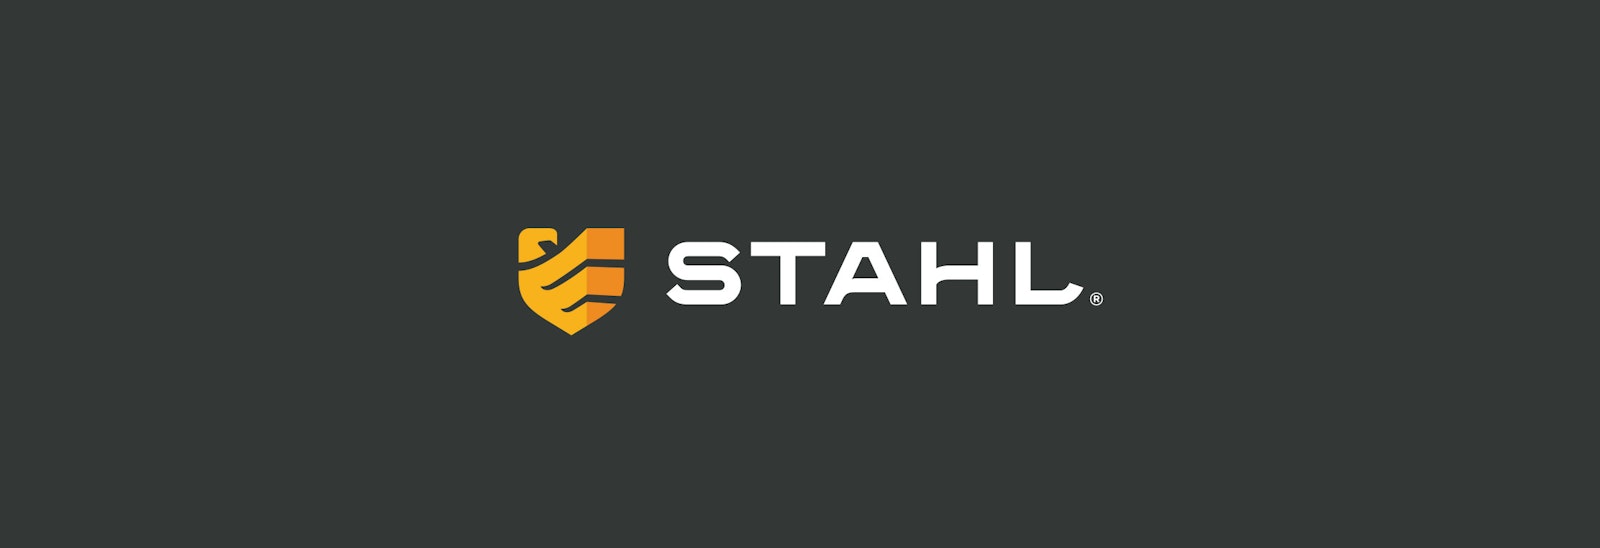 The Stahl Construction brand logo design horizontal of orange shield on black background.